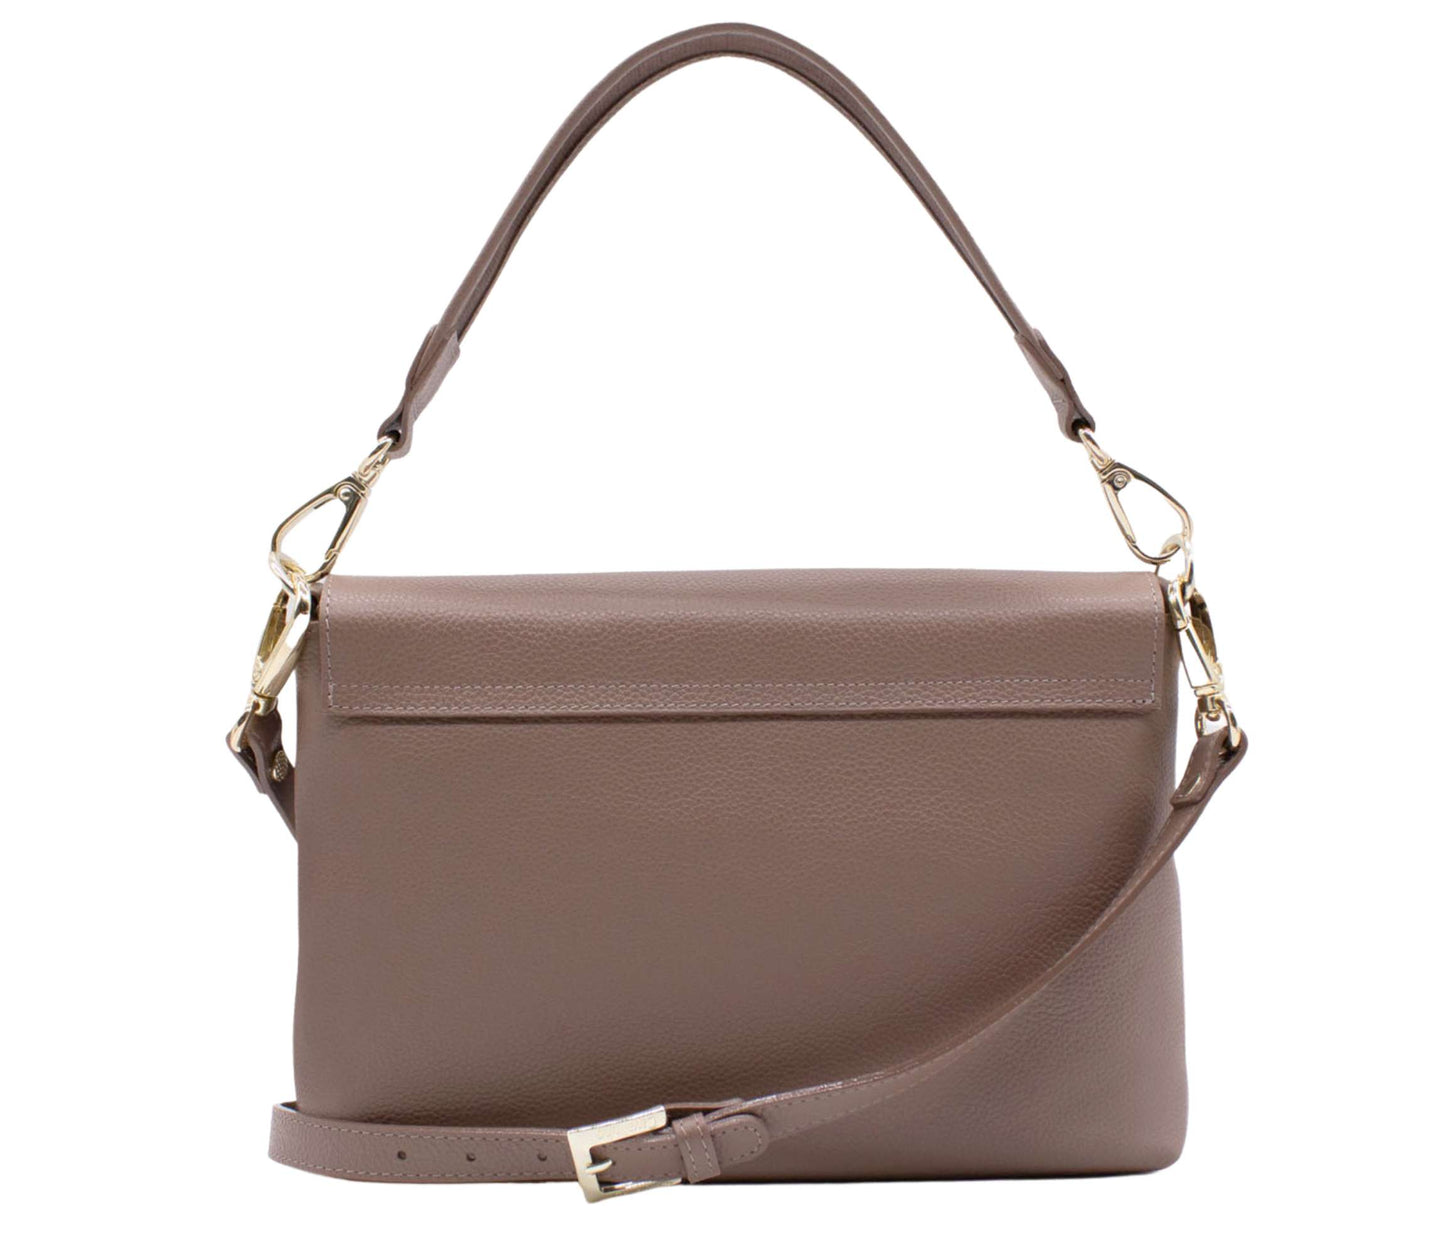 Cavalinho Muse 3 in 1: Leather Clutch, Handbag or Crossbody Bag - Sand - 18300509.07.99_3